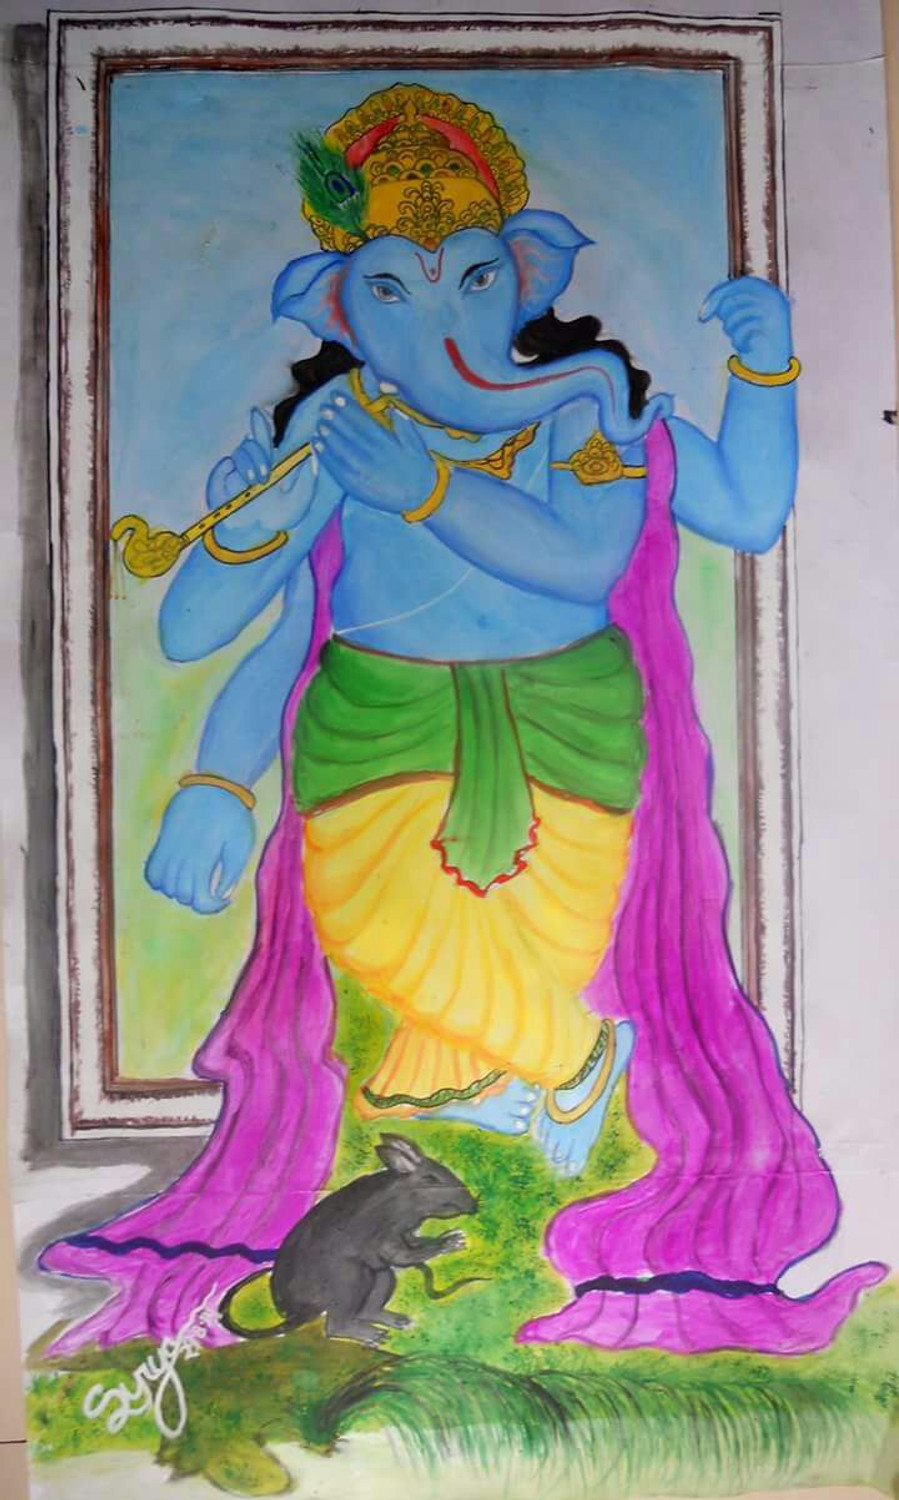 Buy Lord Ganesh Handmade Painting by SURYA DAS. Code:ART_3389_28450 -  Paintings for Sale online in India.